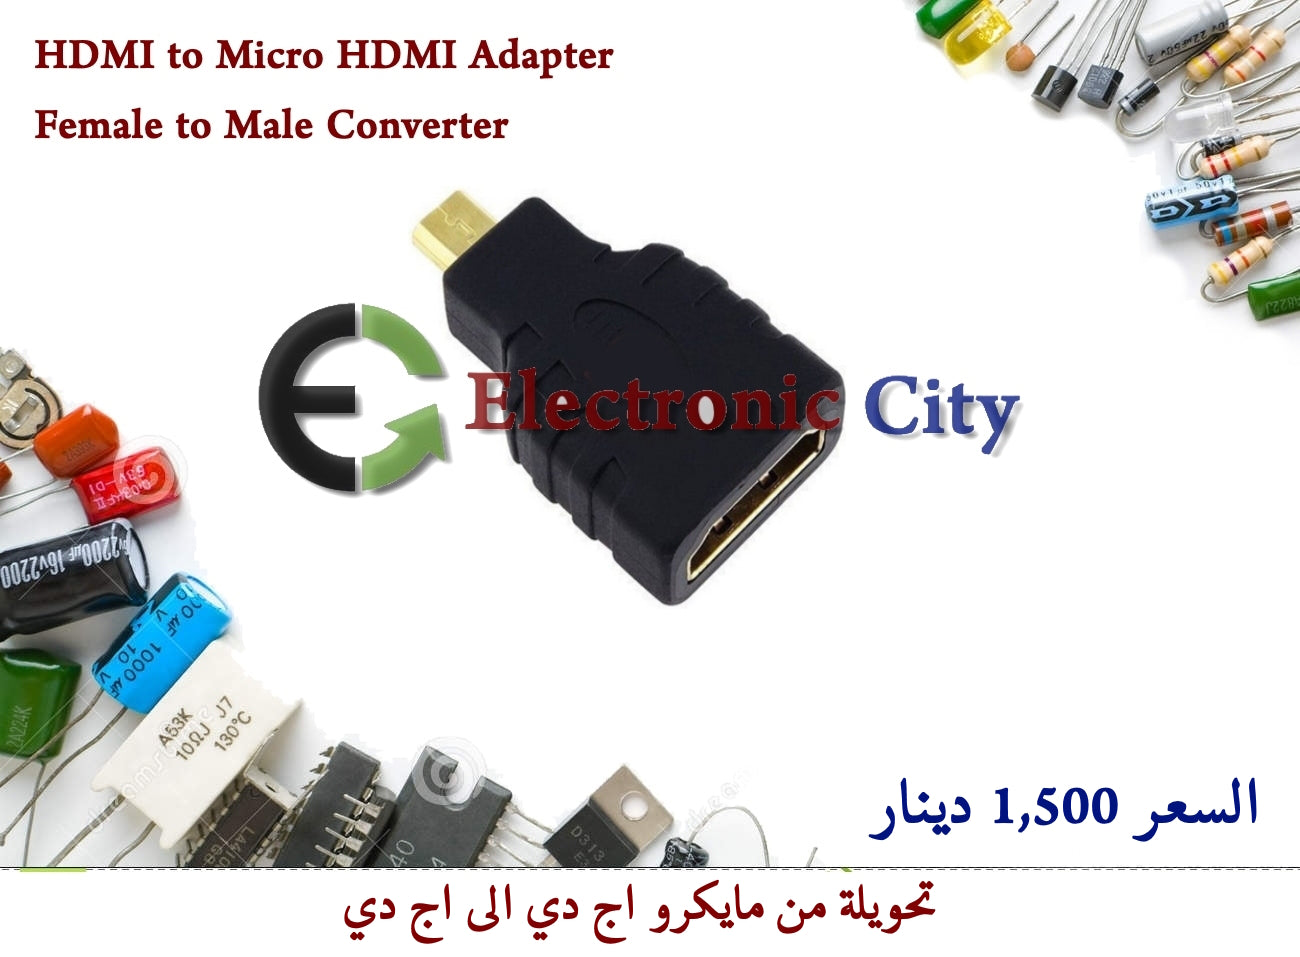 HDMI to Micro HDMI Adapter Female to Male Converter